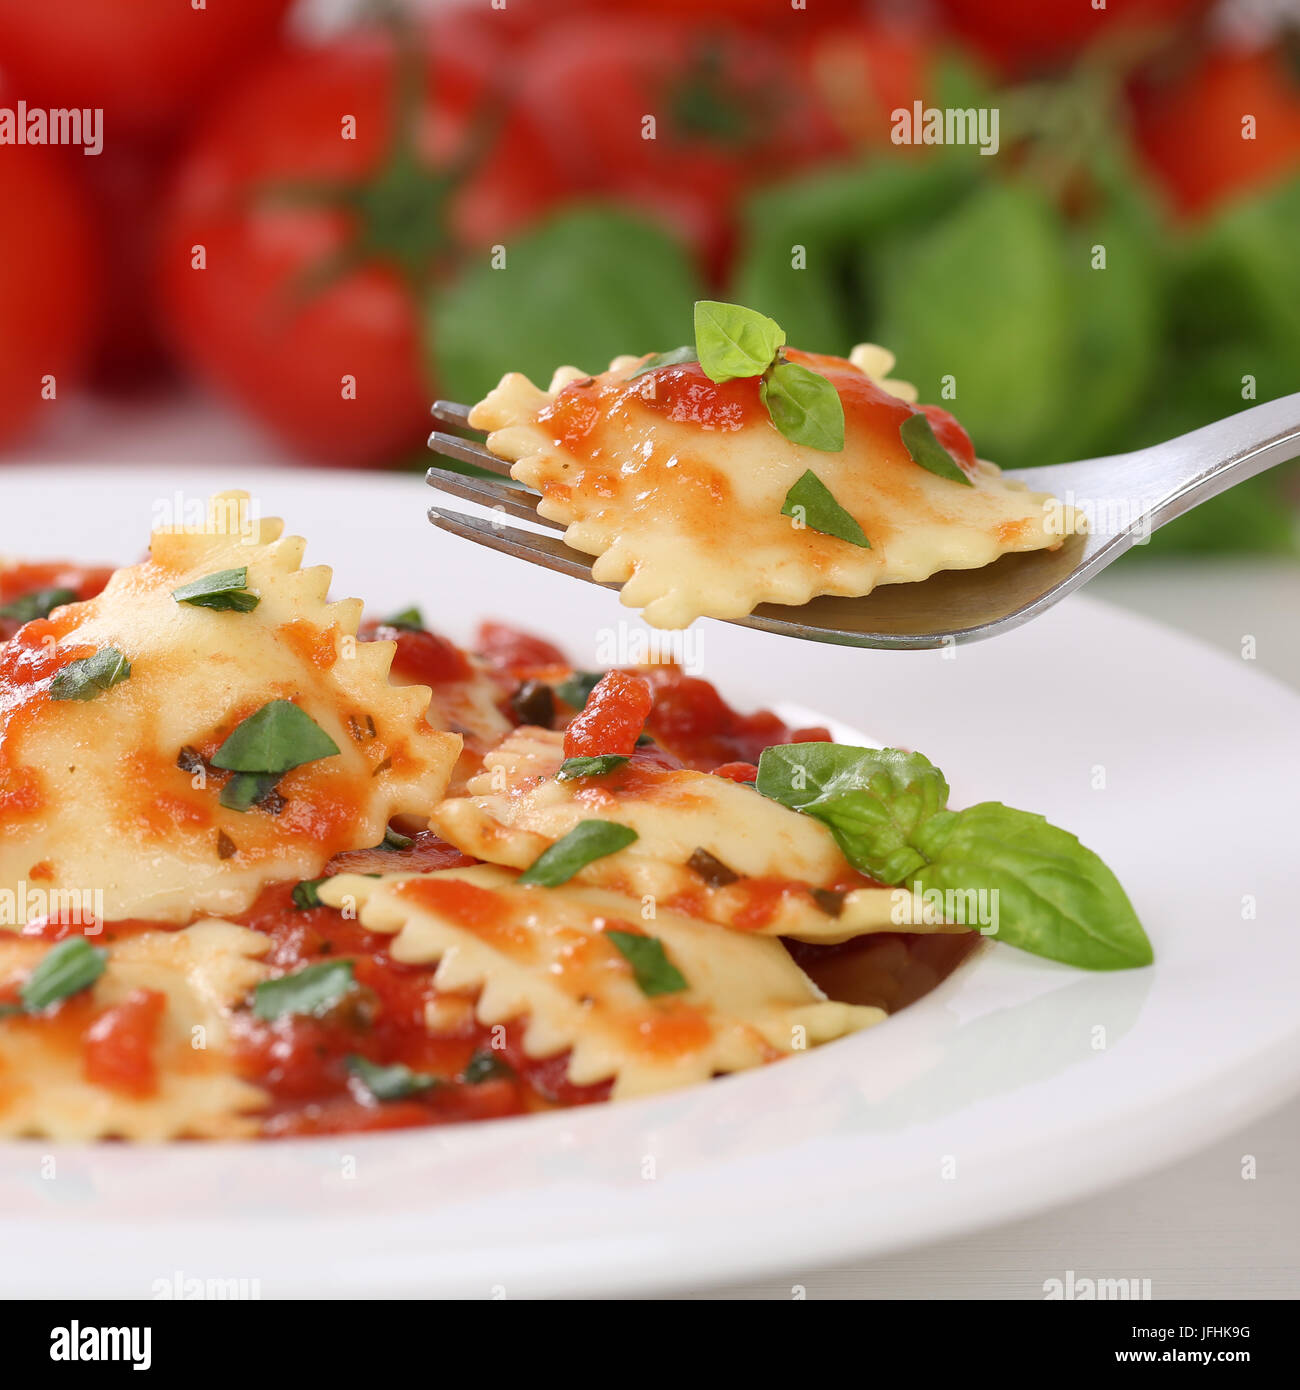 Italienisches Essen Ravioli Nudeln Mit Tomaten Sauce Pasta Gericht Stock Photo Alamy